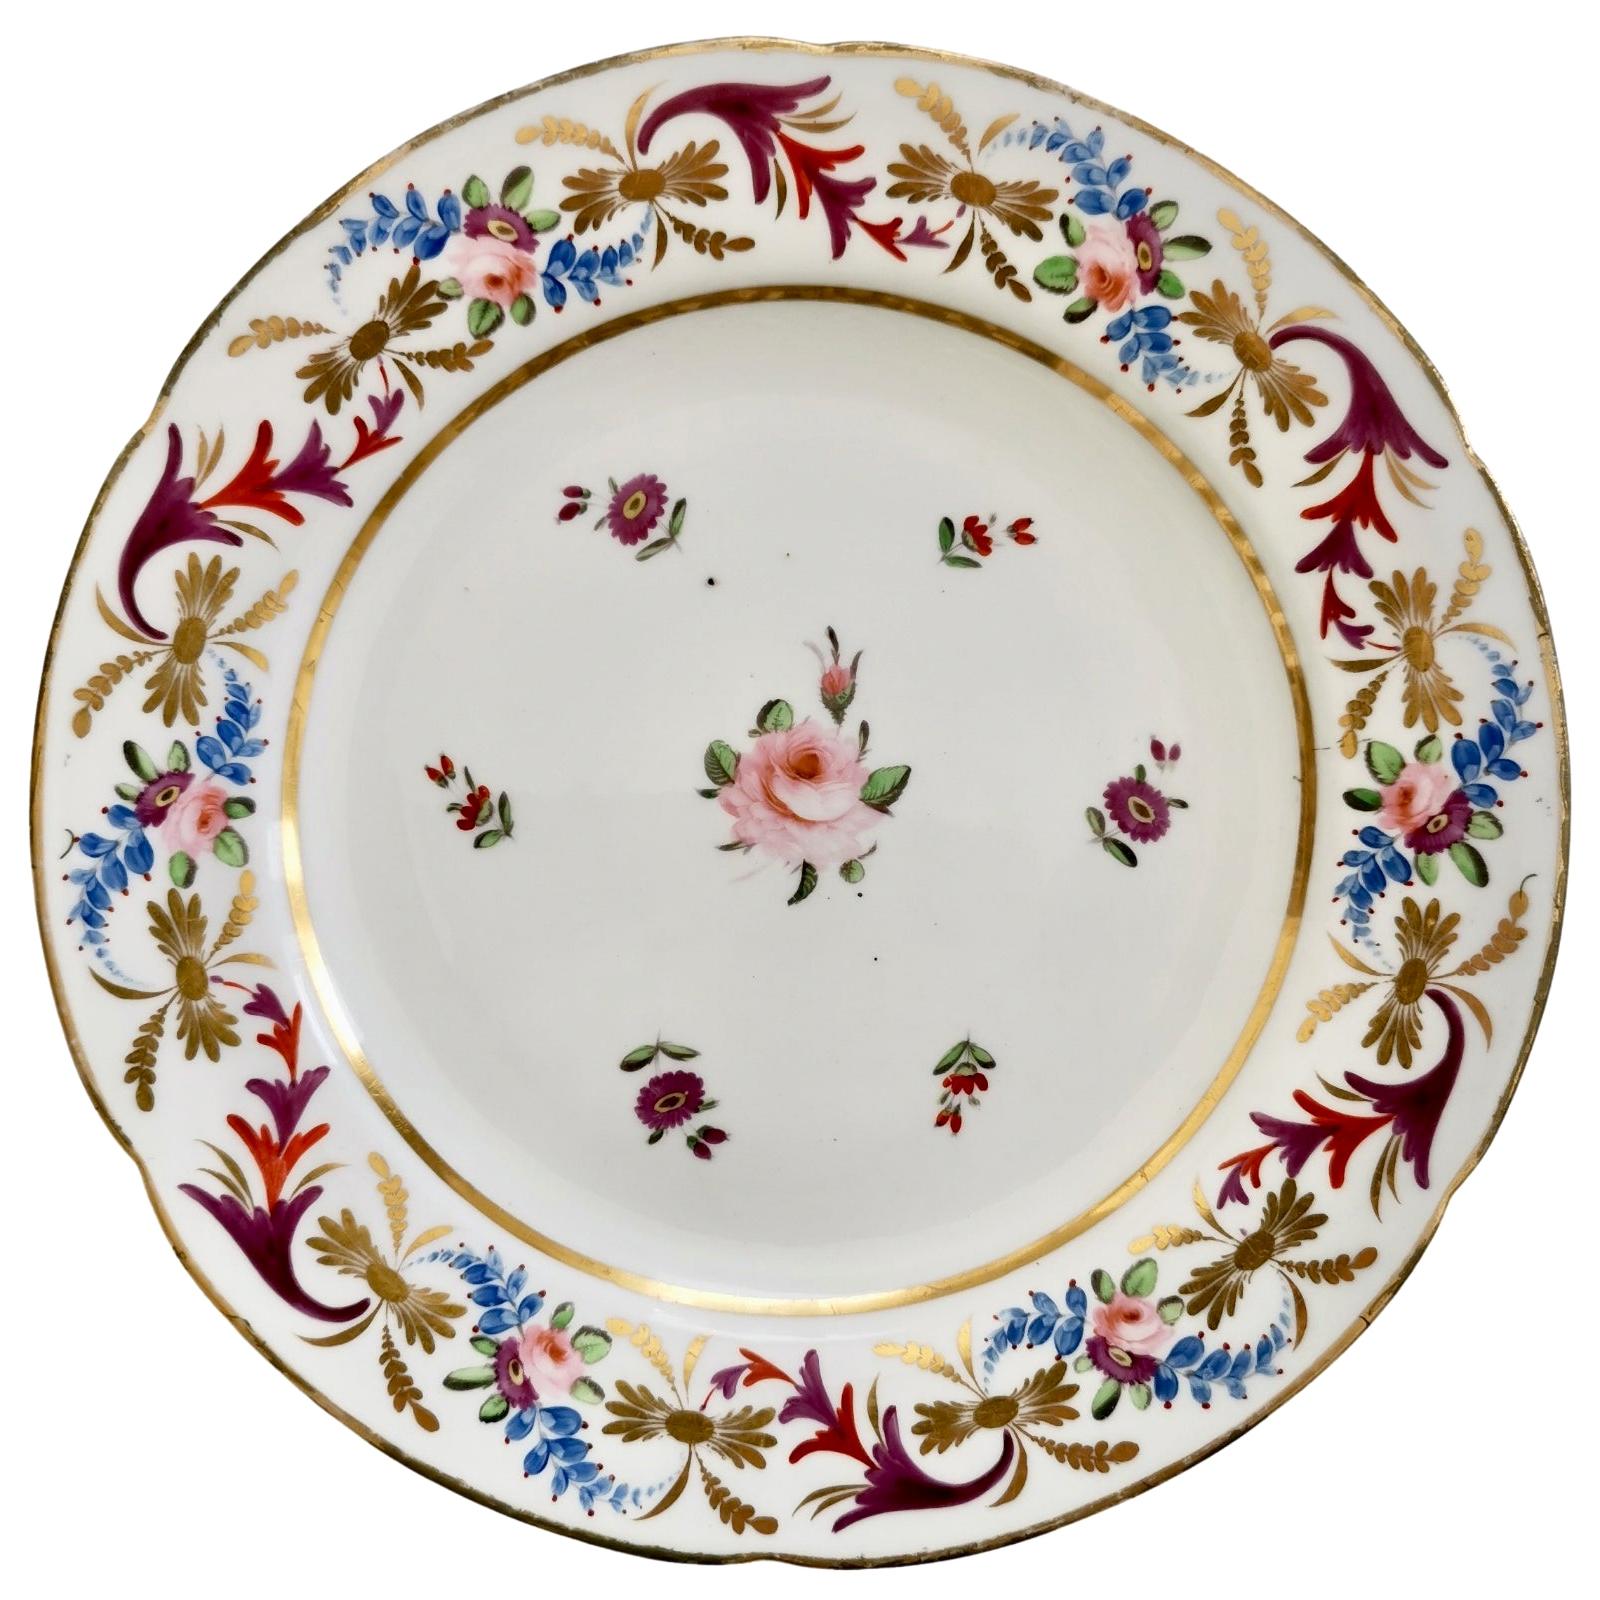 John Rose Coalport Porcelain Plate, Improved Feldspar, Regency Pattern ca 1825